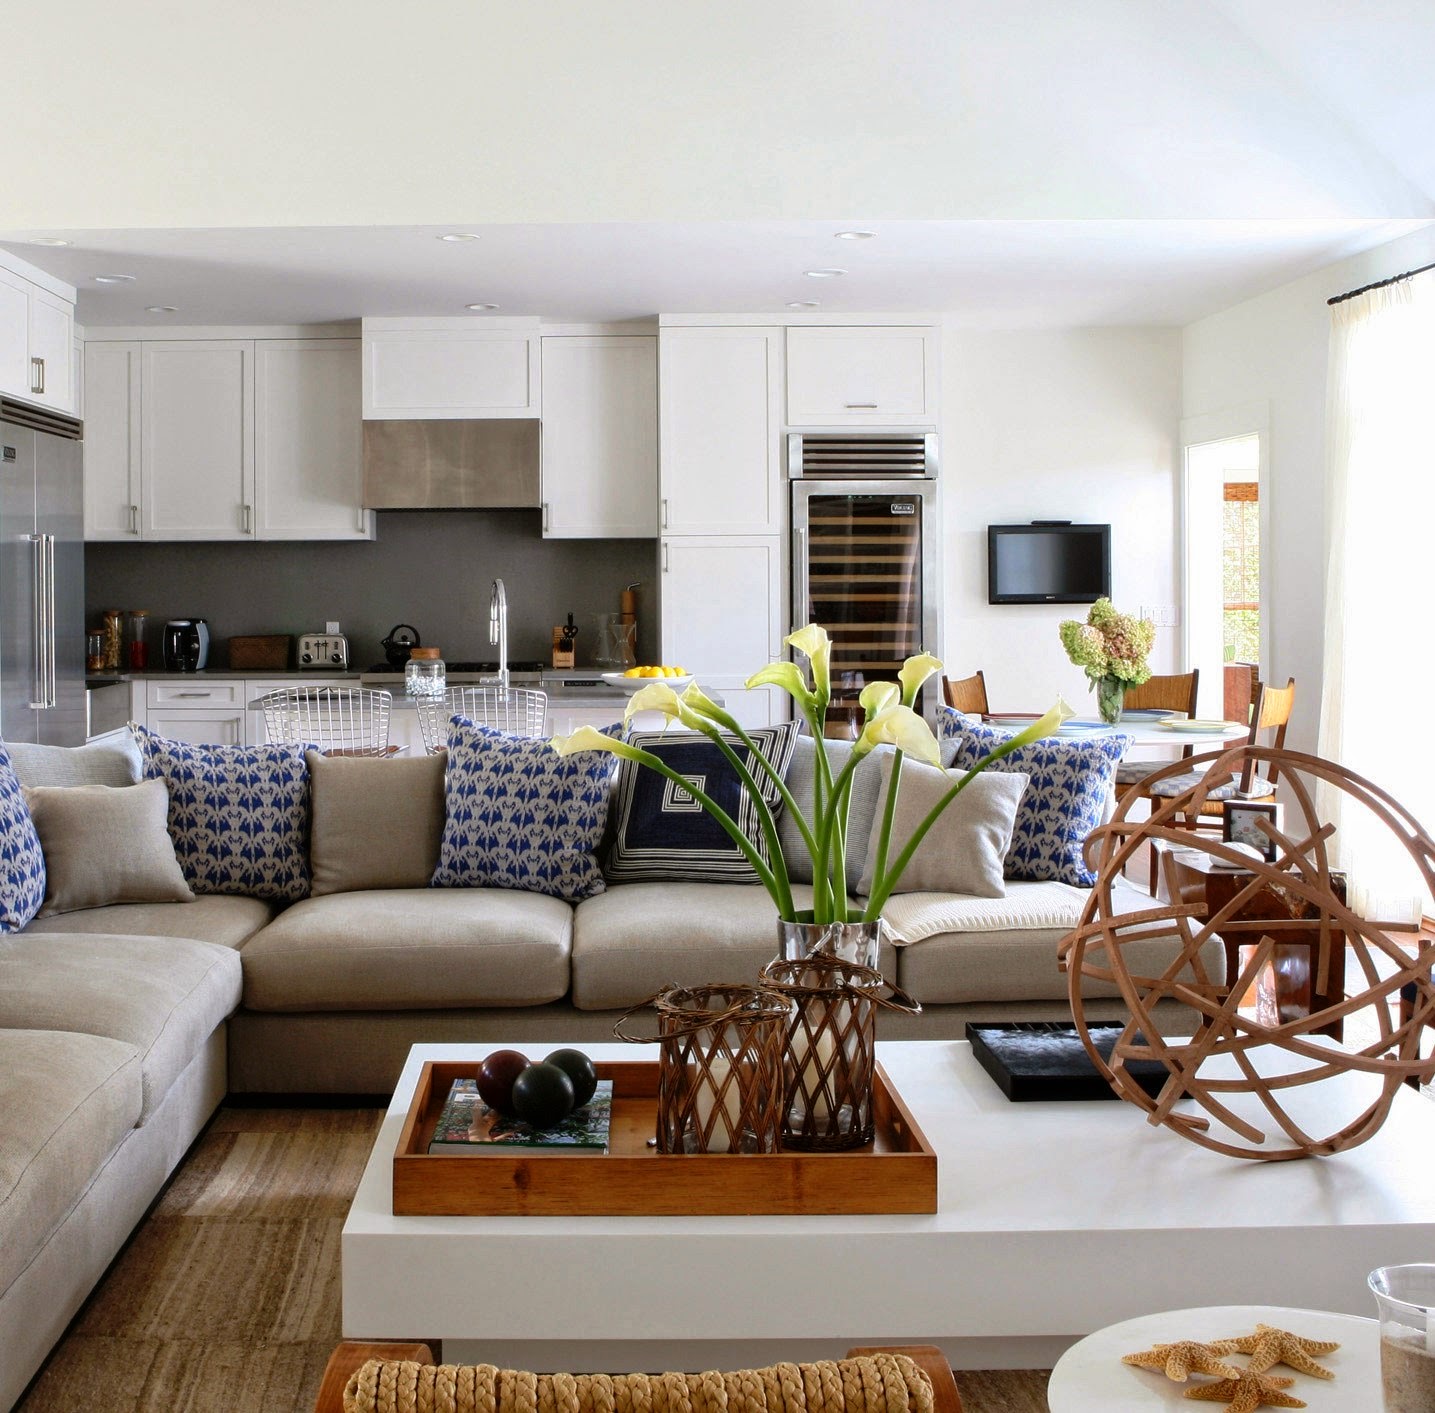 Designing A Beach Themed Living Room | Ideas for home decor